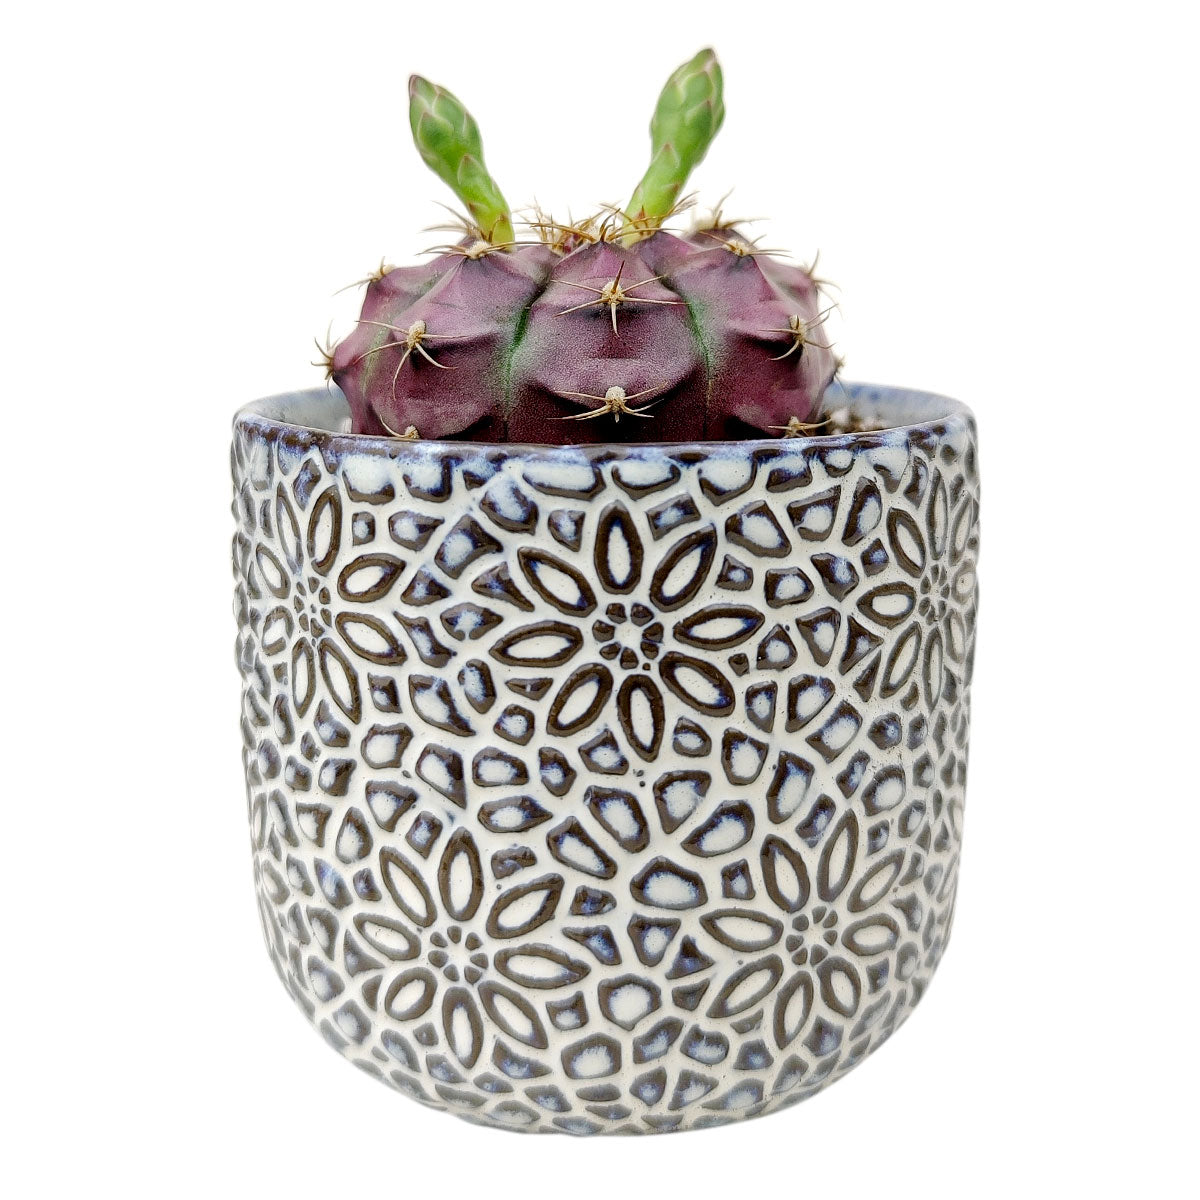 Geometric Floral Pot for sale, Ceramic Pot for succulents and flowers, Modern style flower pot for sale, Succulent gift decor ideas